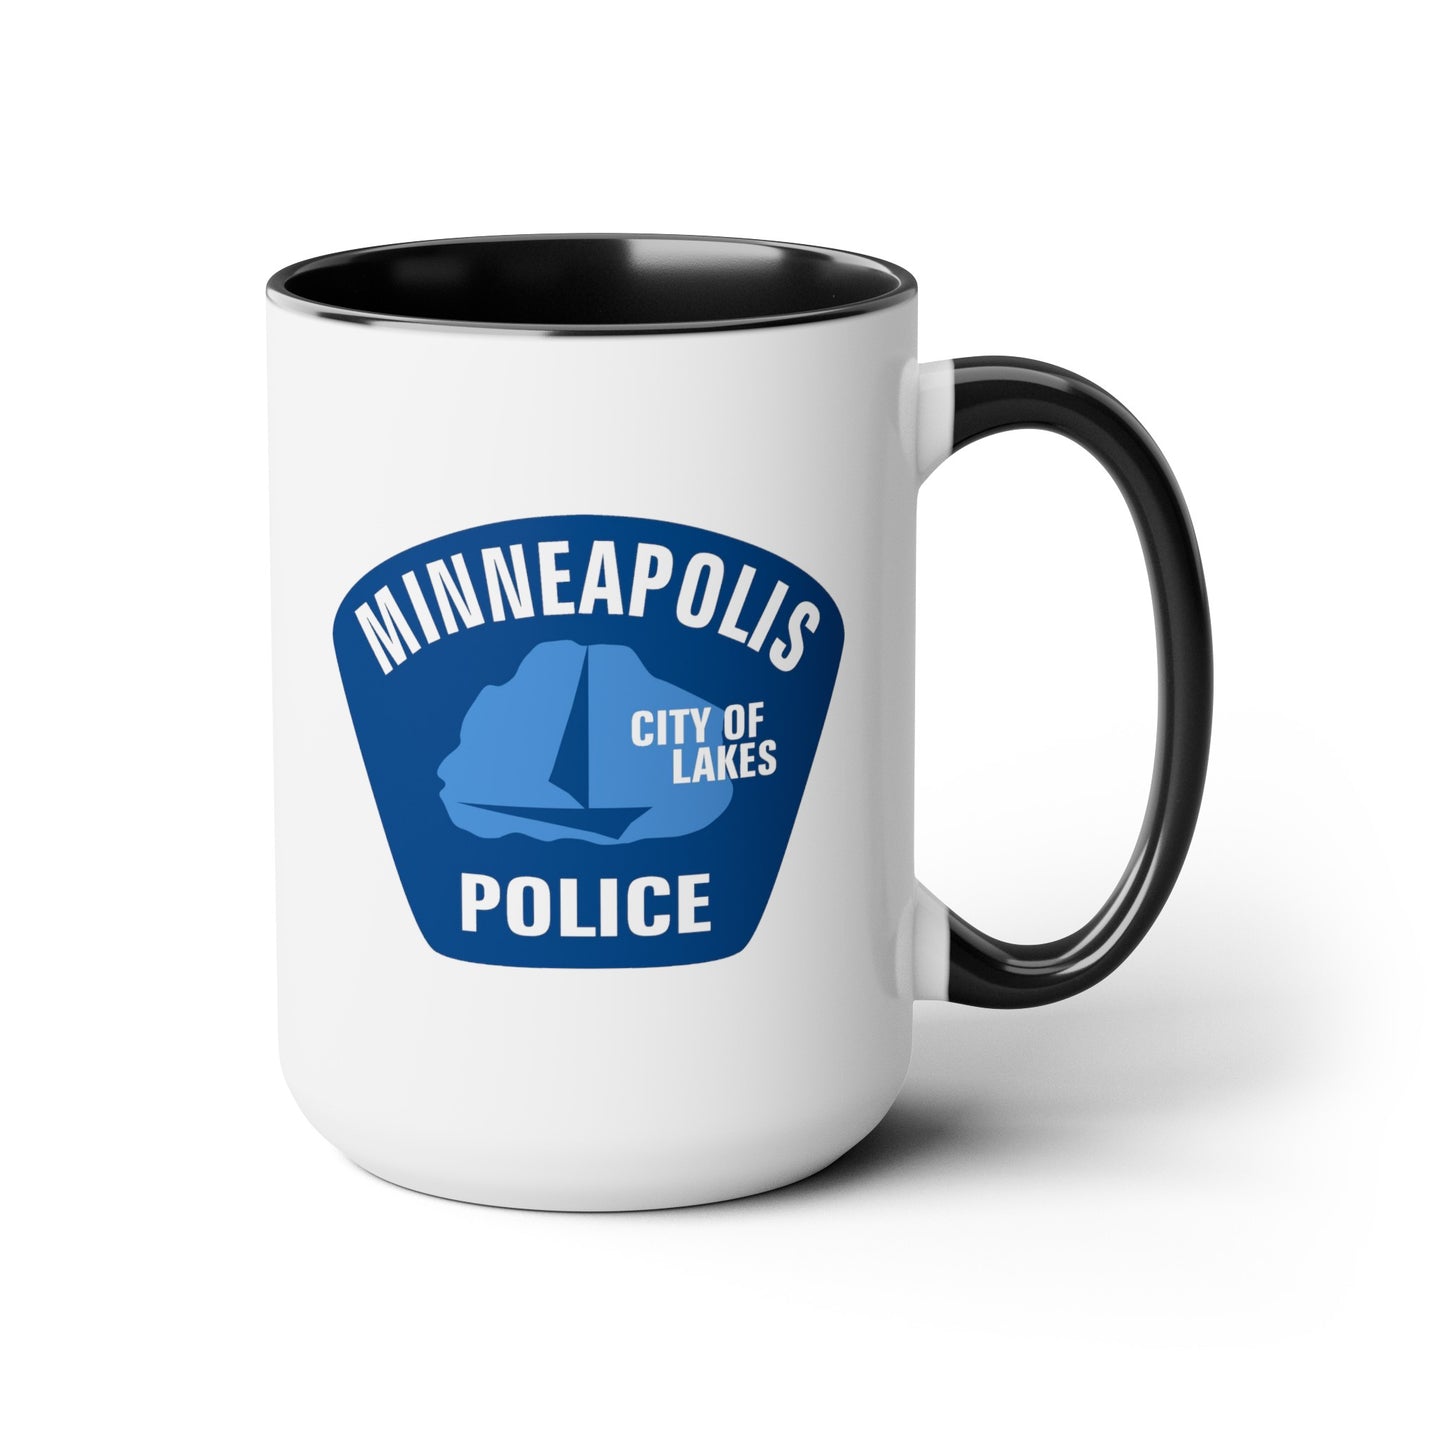 Minneapolis Police Coffee Mug - Double Sided Black Accent White Ceramic 15oz by TheGlassyLass.com